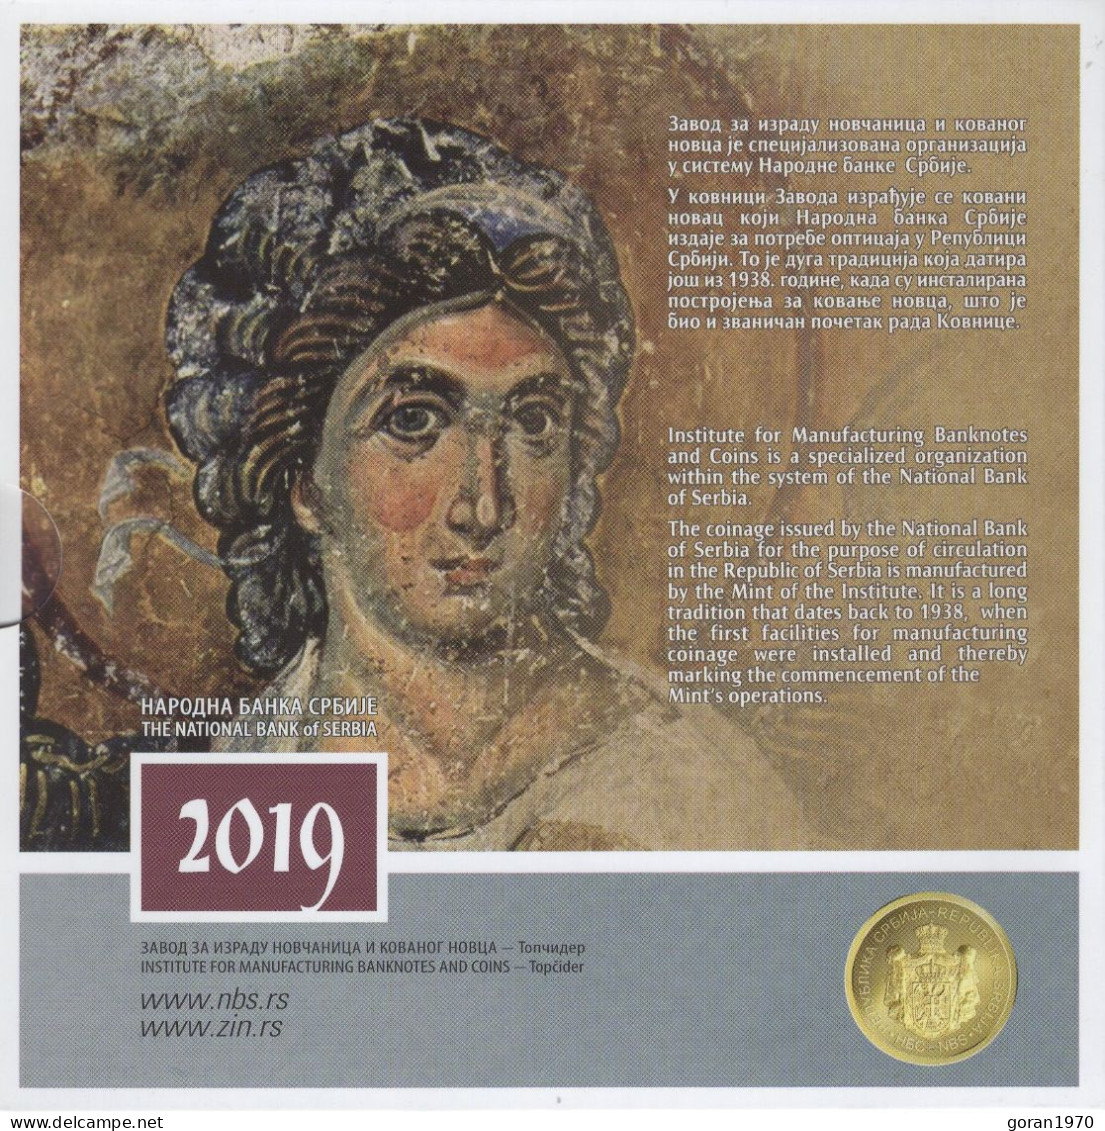 SERBIA: Set of coins 2019. 1,2 and 5 dinars + Medal (800 years of Mileševa Monastery)